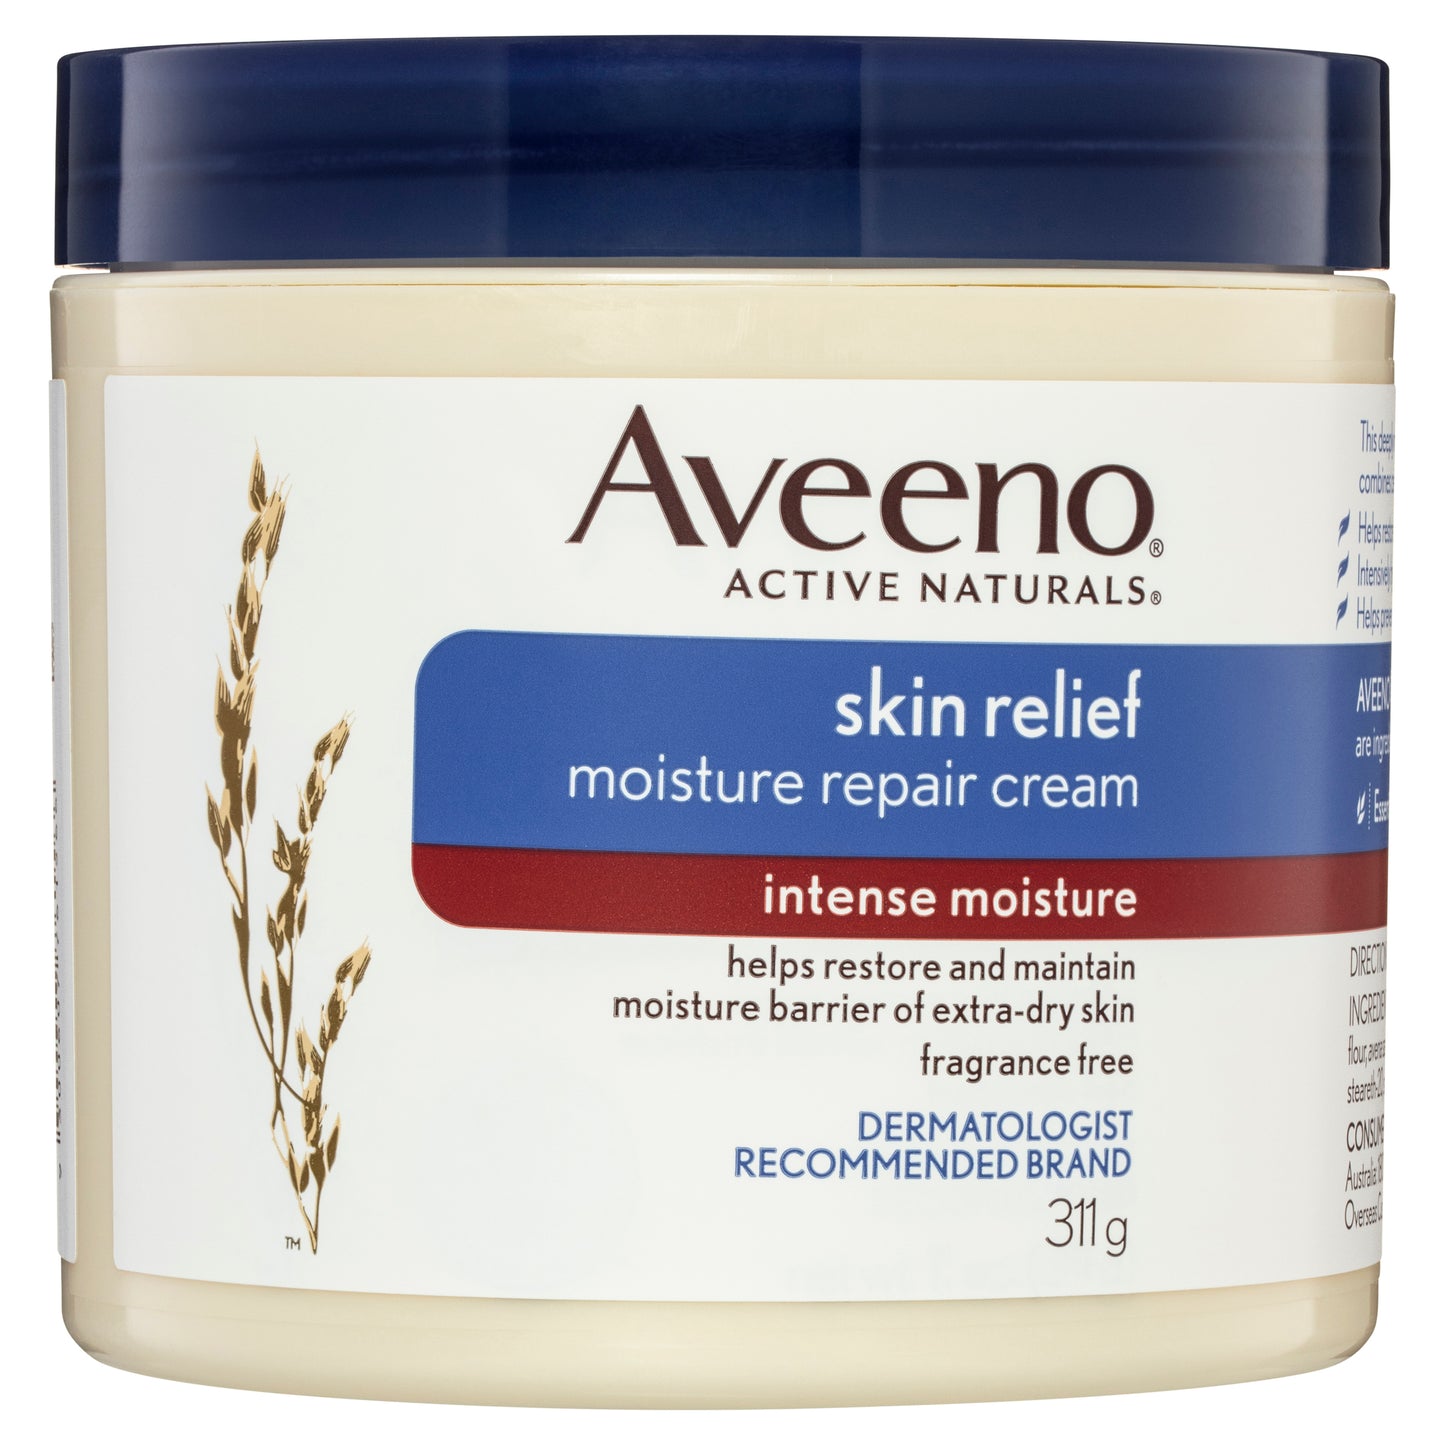 Aveeno Active Naturals Skin Relief Fragrance Free Moisture Repair Cream 311g